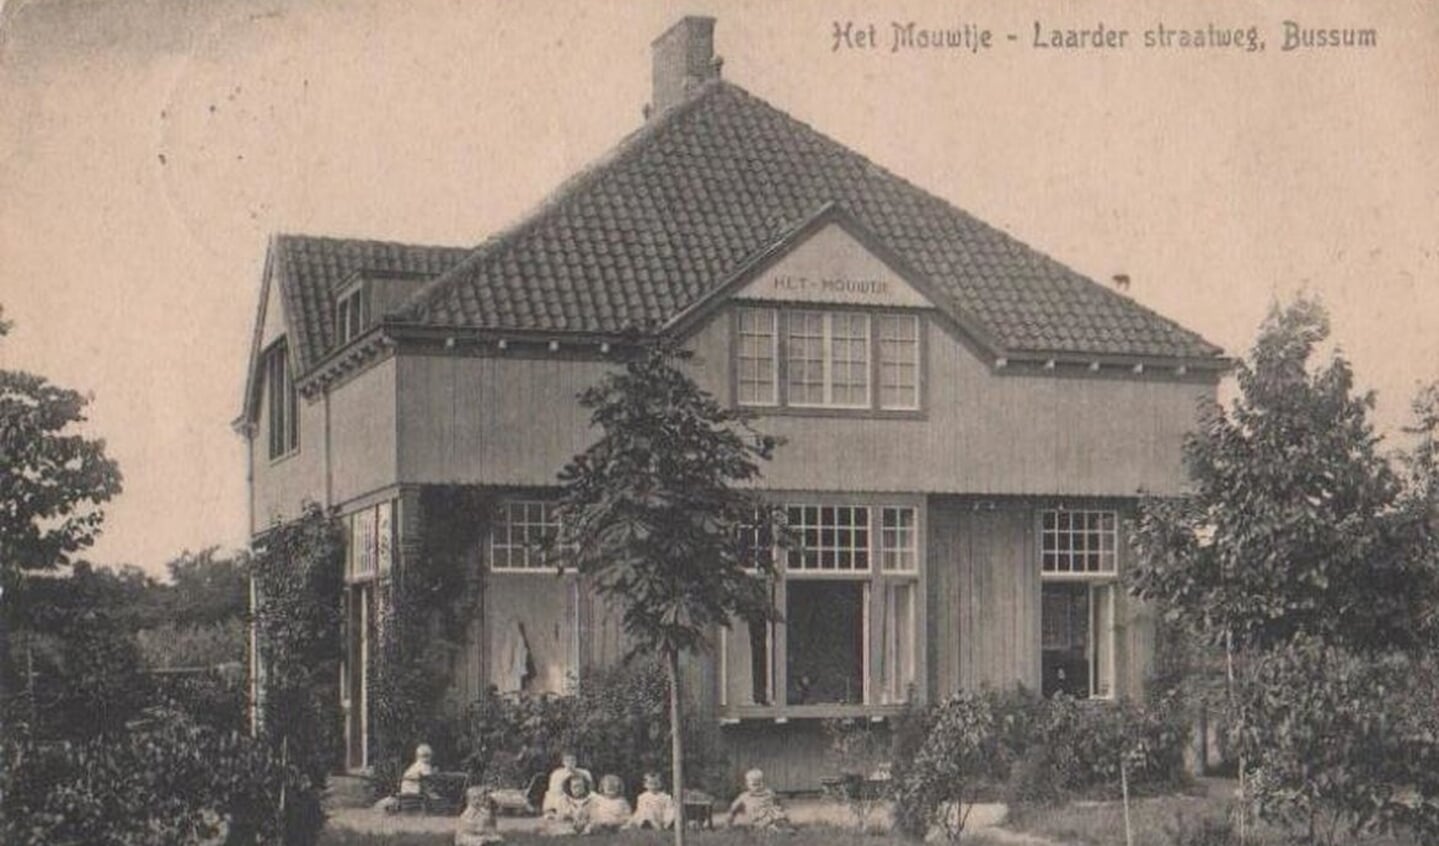 De orginele villa Het Mouwtje wordt monument.